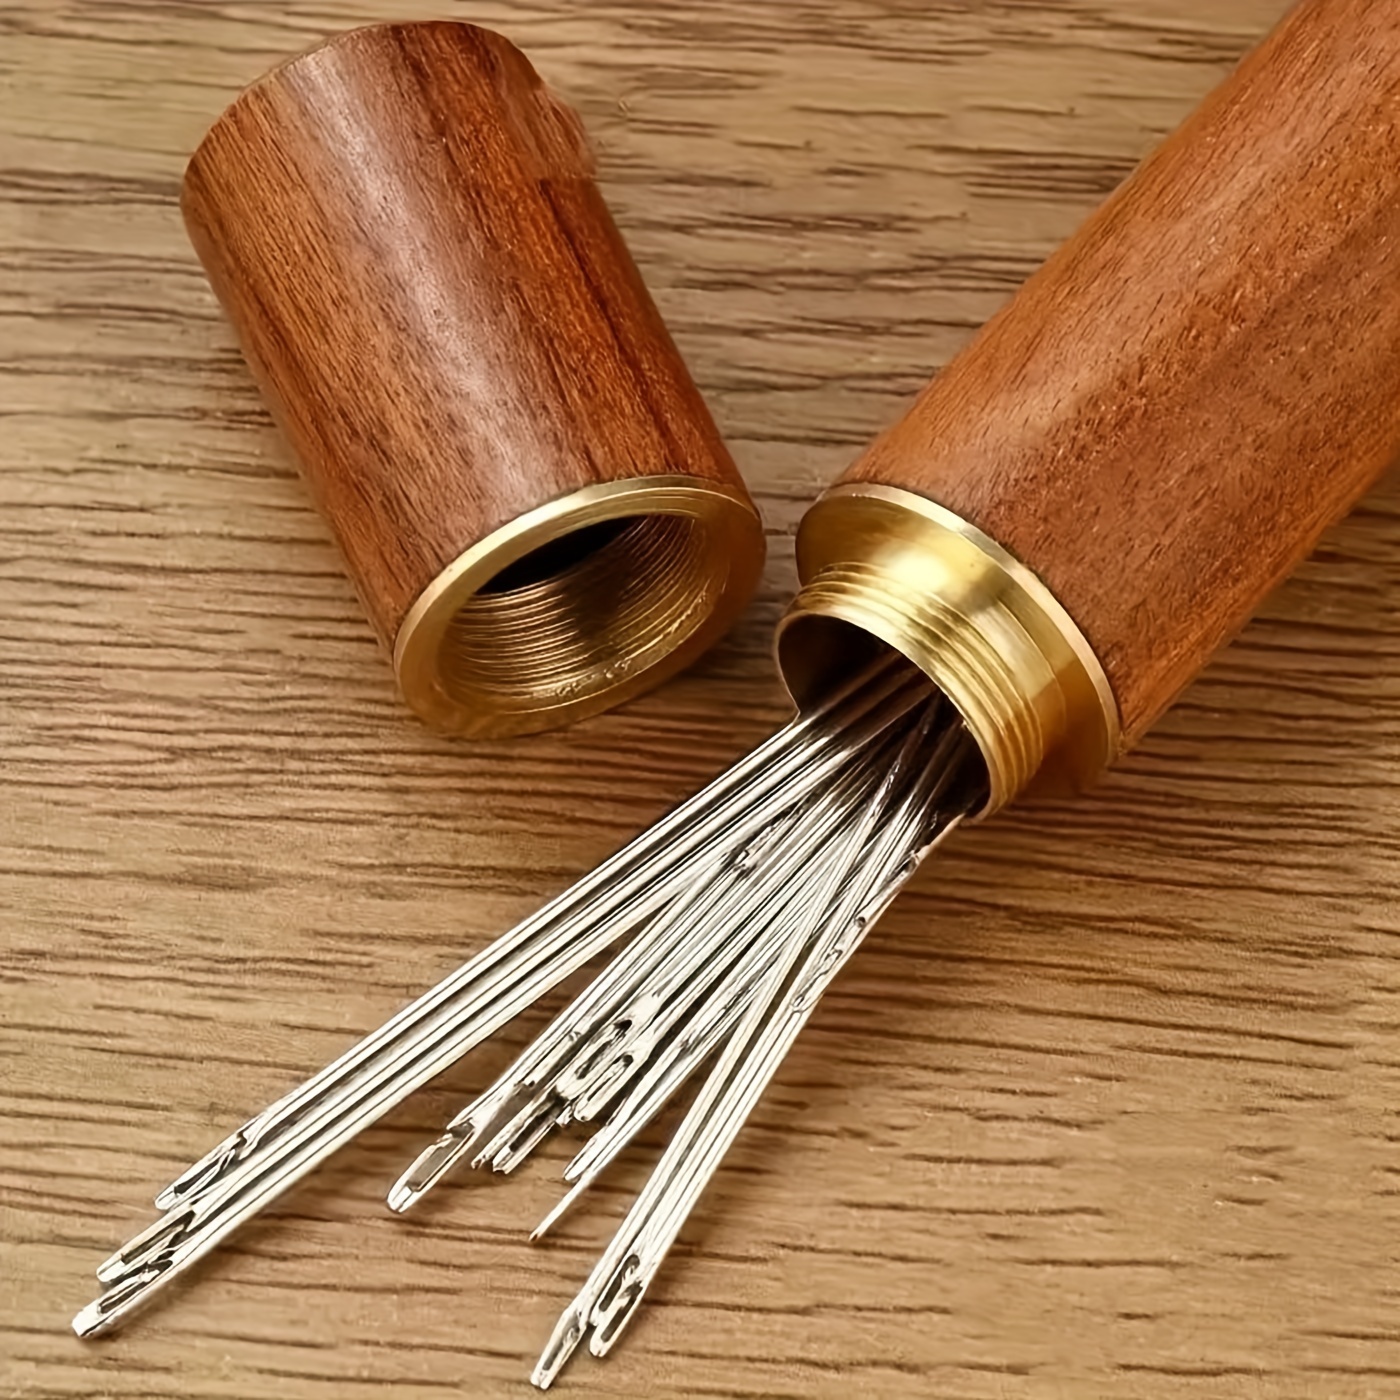 Tika Stainless Steel self-threading 24pcs Needles Opening Sewing Darning Needles US